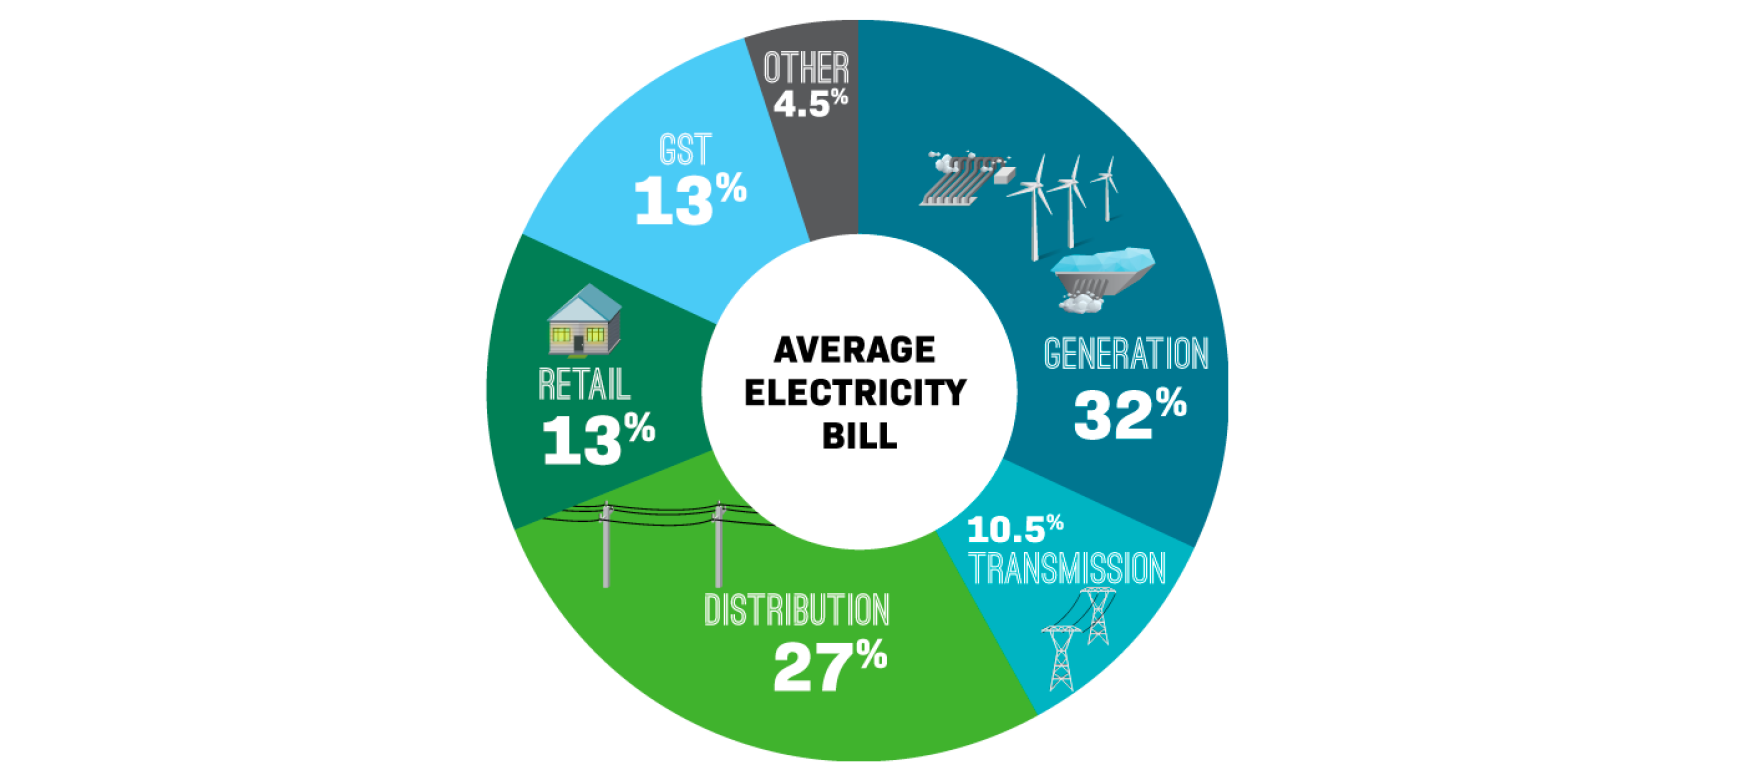 Average NZ electricity bill is 32% generation, 27% distribution, 13% retail, 13% GST, 10.5% transmission.